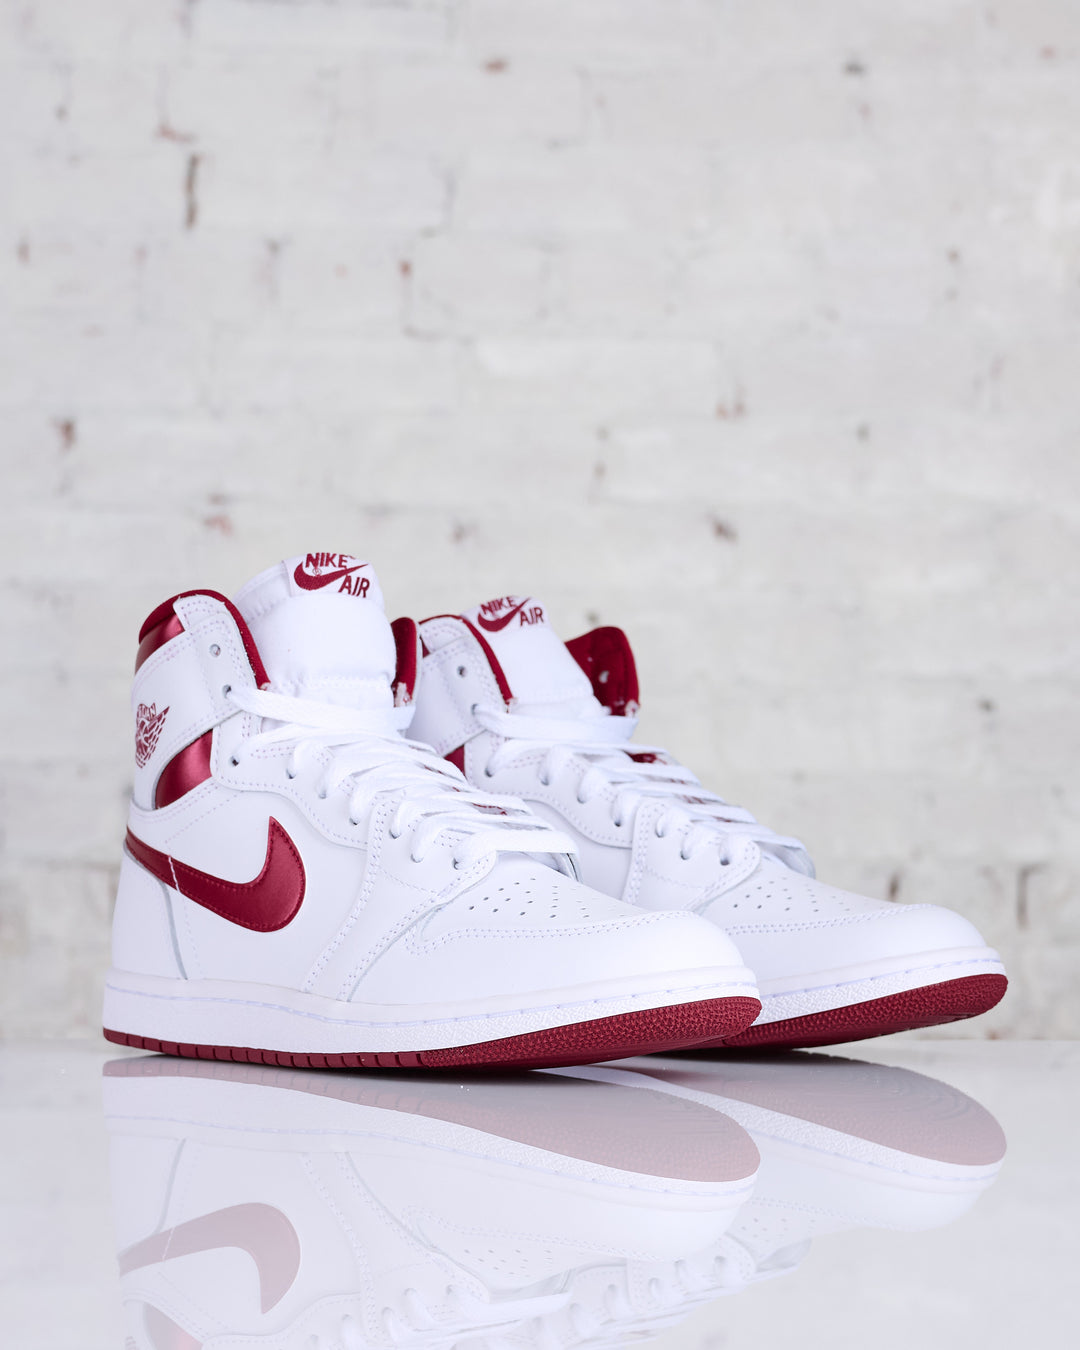 Nike Men's Air Jordan 1 High '85 "Metallic Burgundy" White/Team Red-White